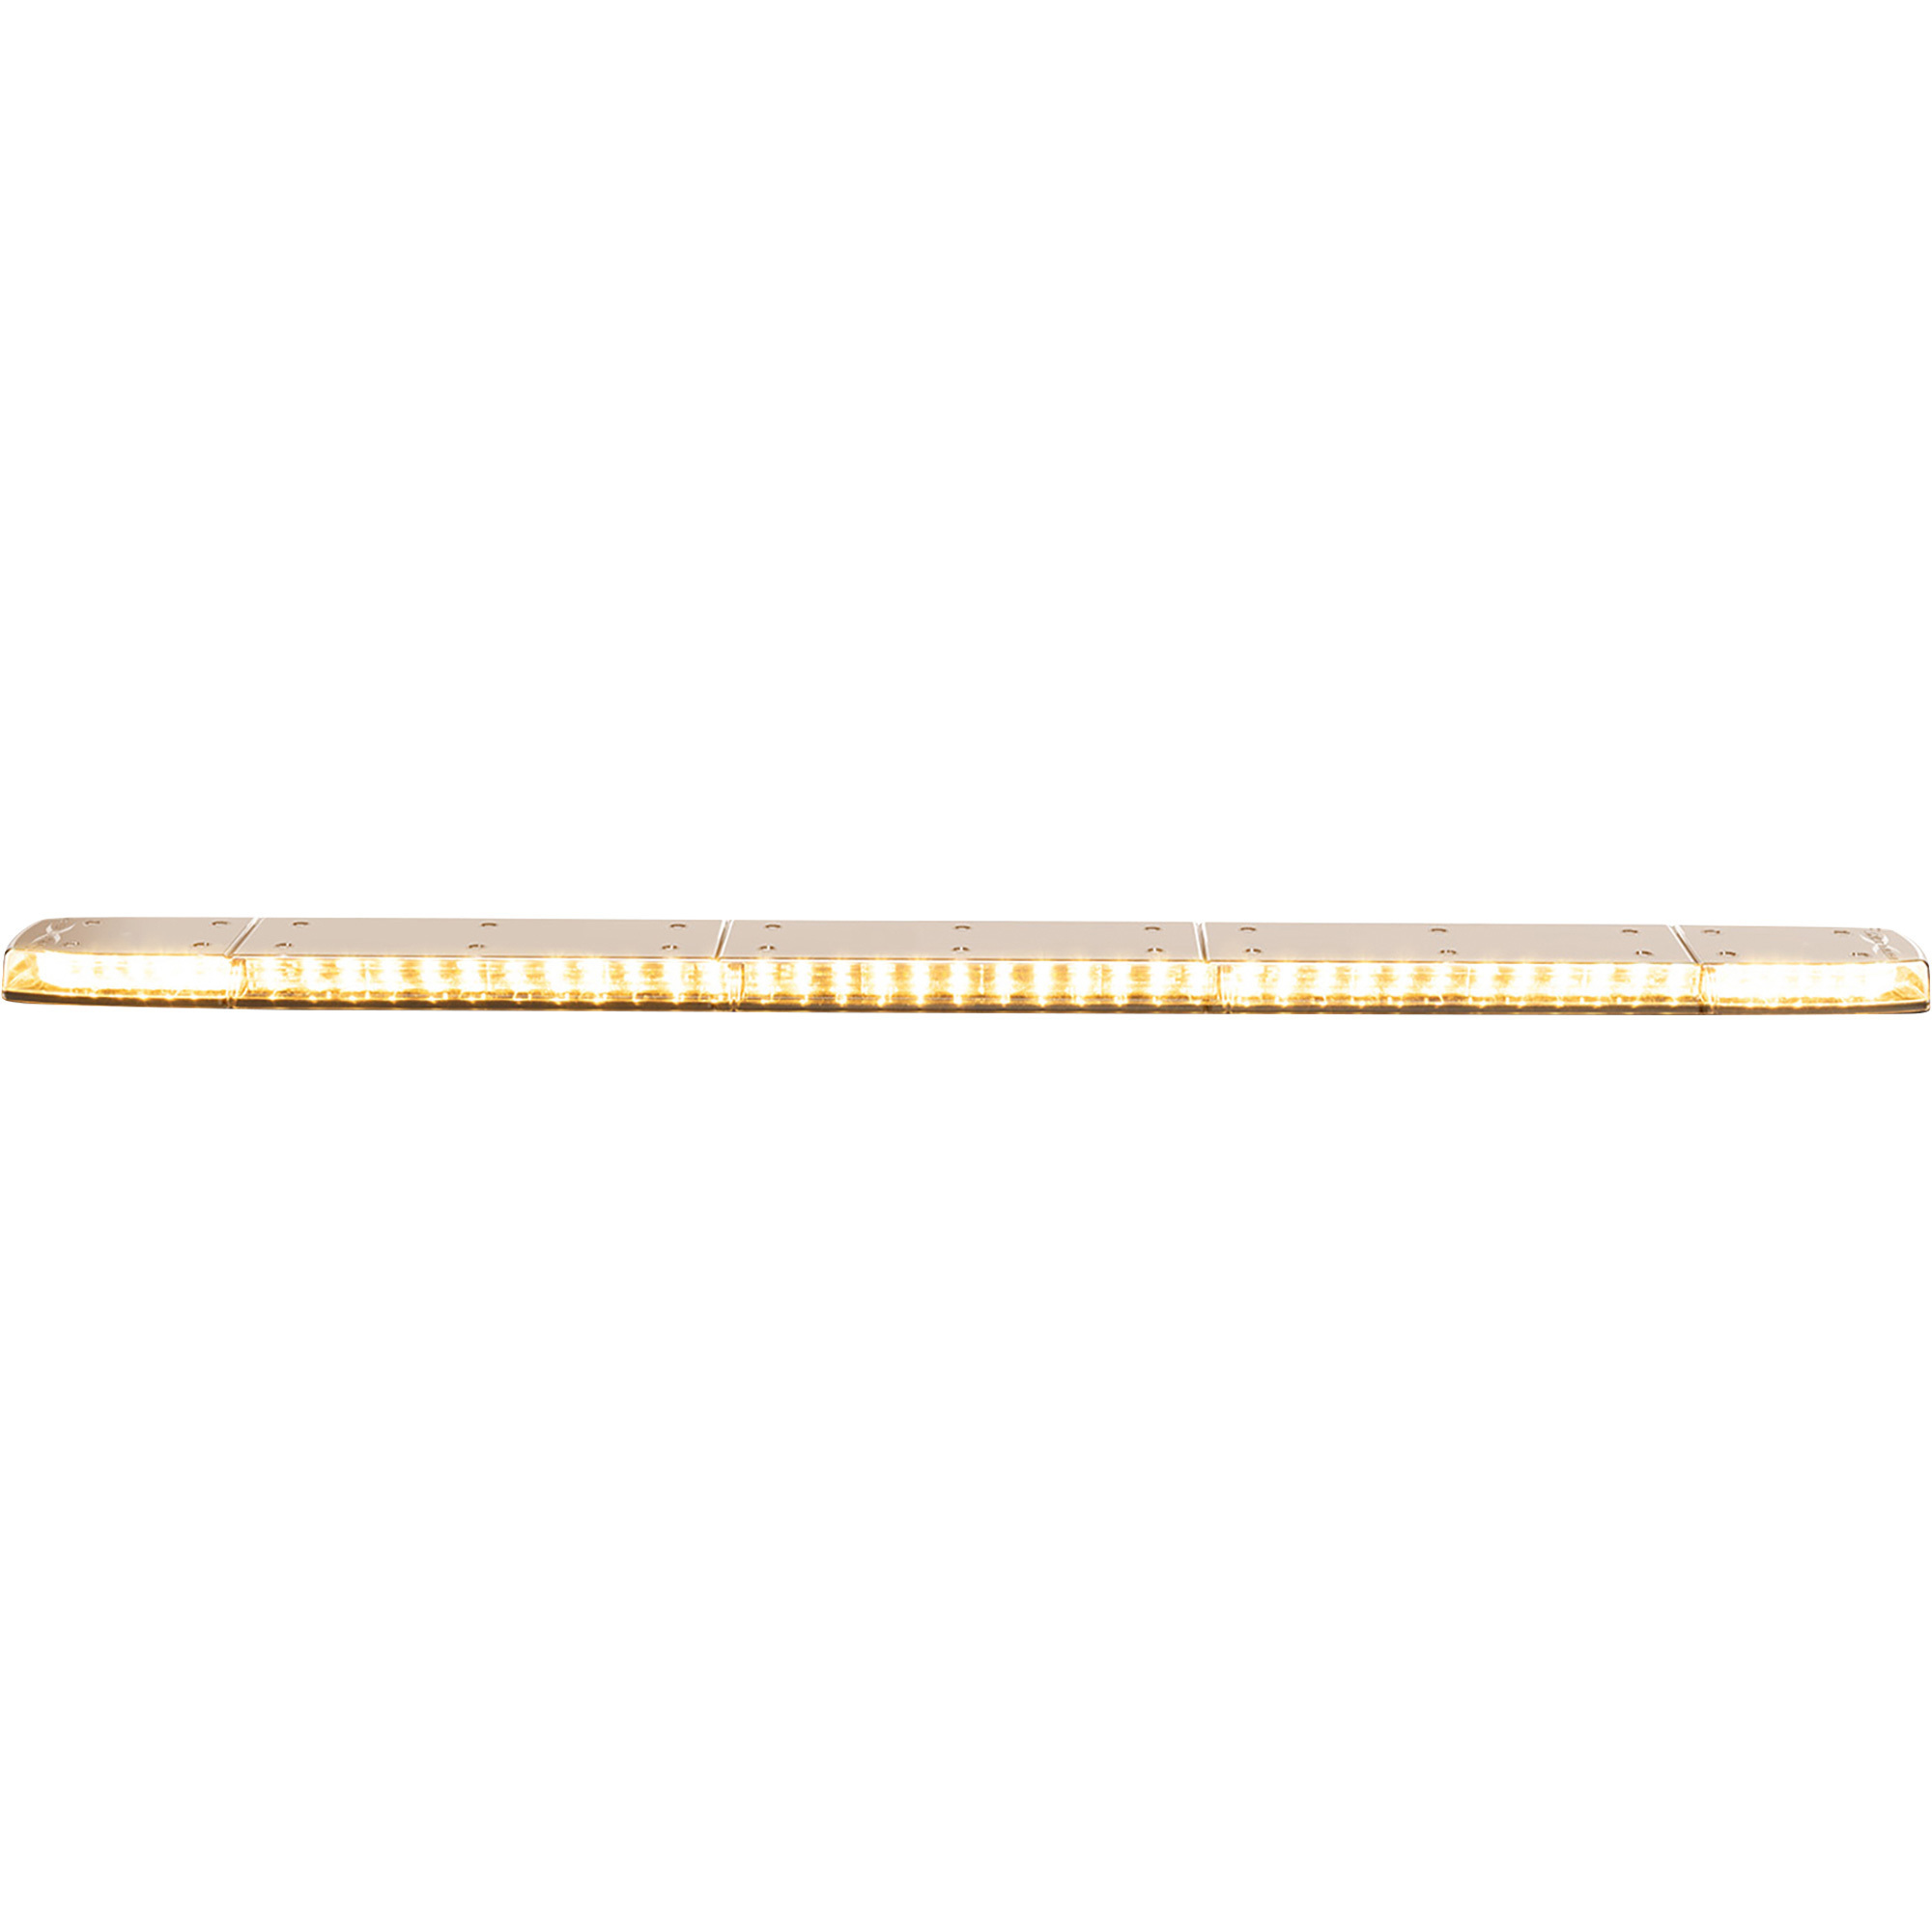 Ecco LED Light Bar â 48Inch, Amber, Permanent Mount, Model 11-048CA-E